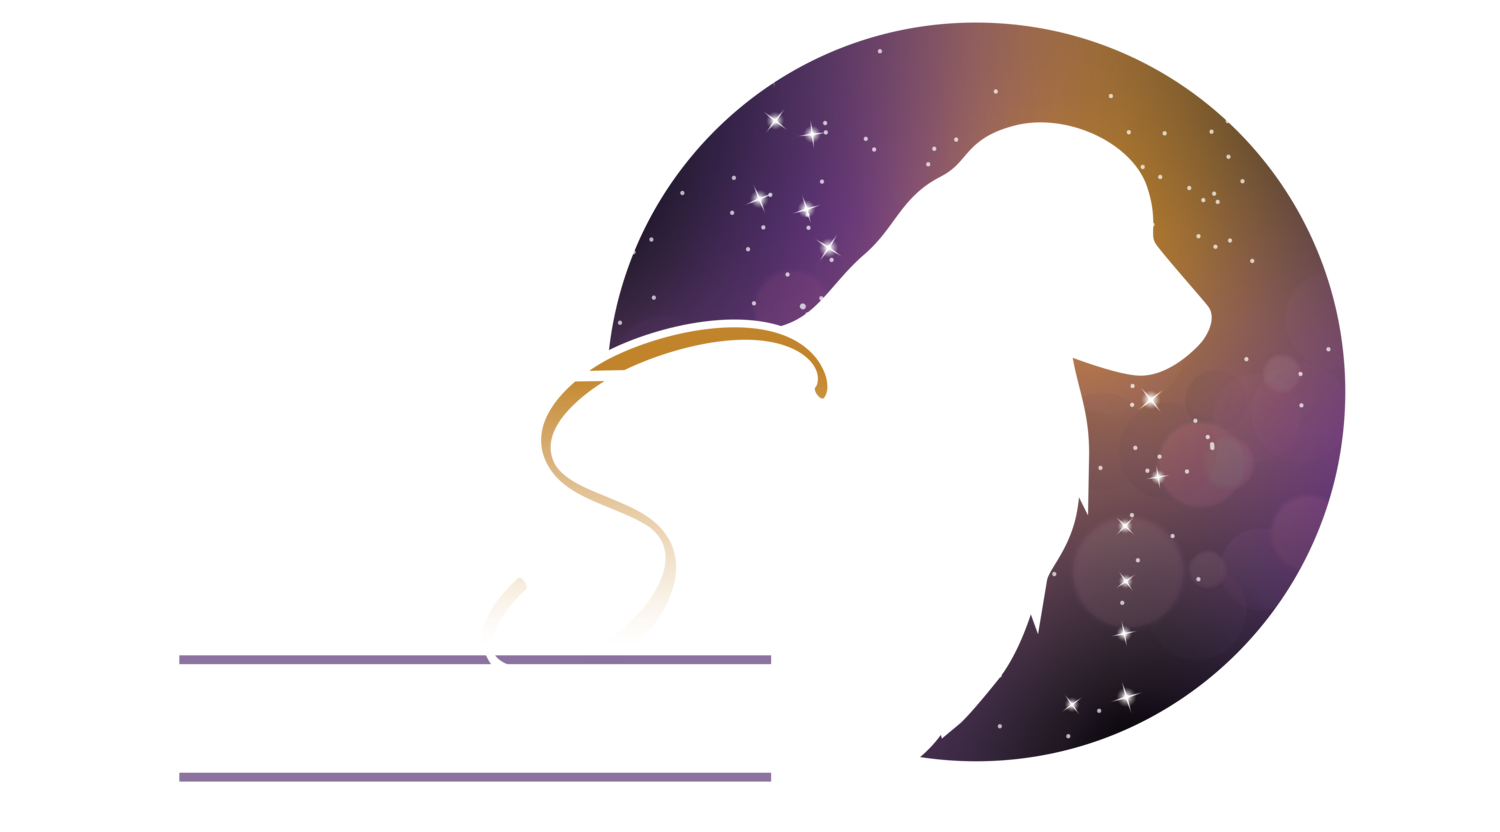 TrueStar Golden Retrievers